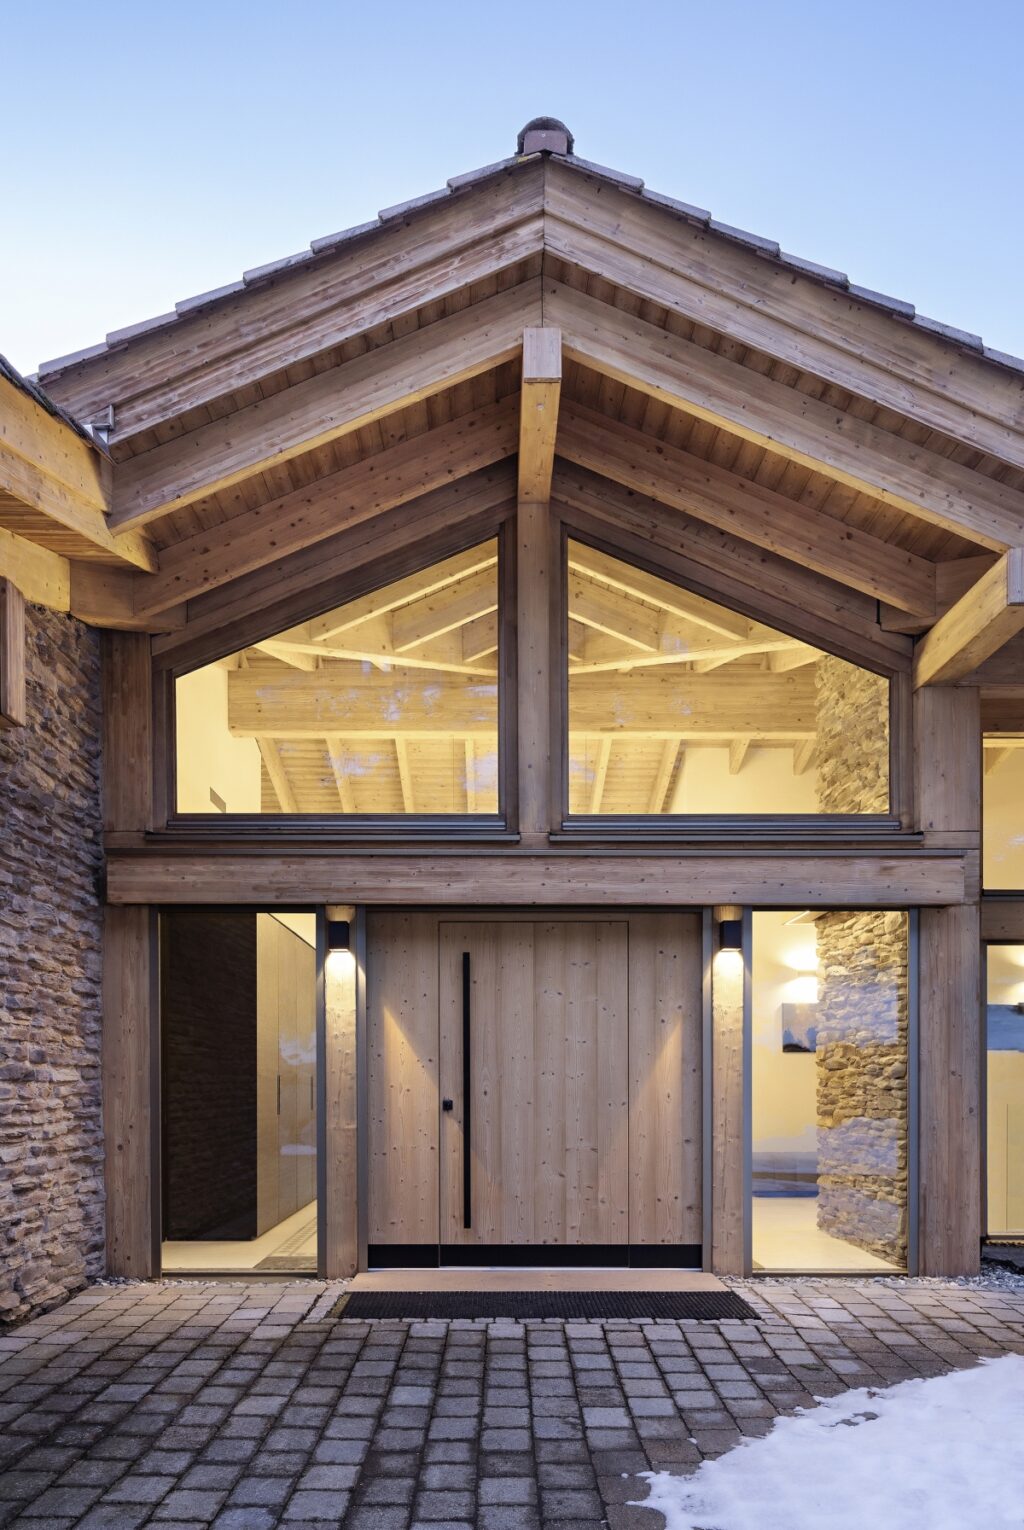 Chalet D μια δομή από ξύλο, πέτρα και μέταλλο για έναν οργανικό μινιμαλισμό. αρχιτεκτονική και σχεδιασμός μίνι βαν